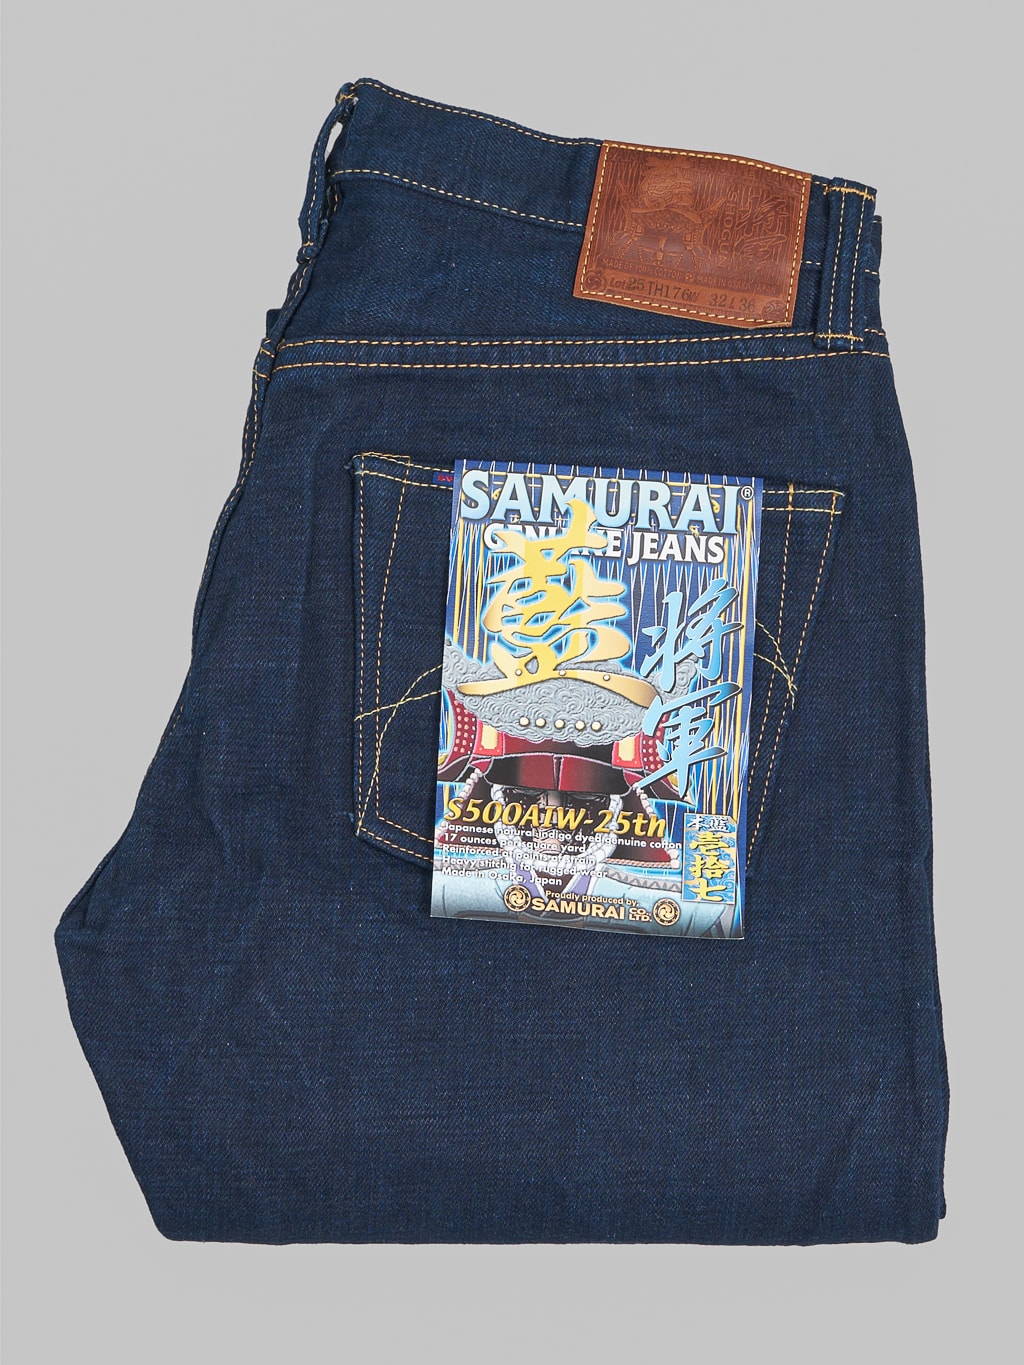 Samurai Jeans S500AIW-25TH 